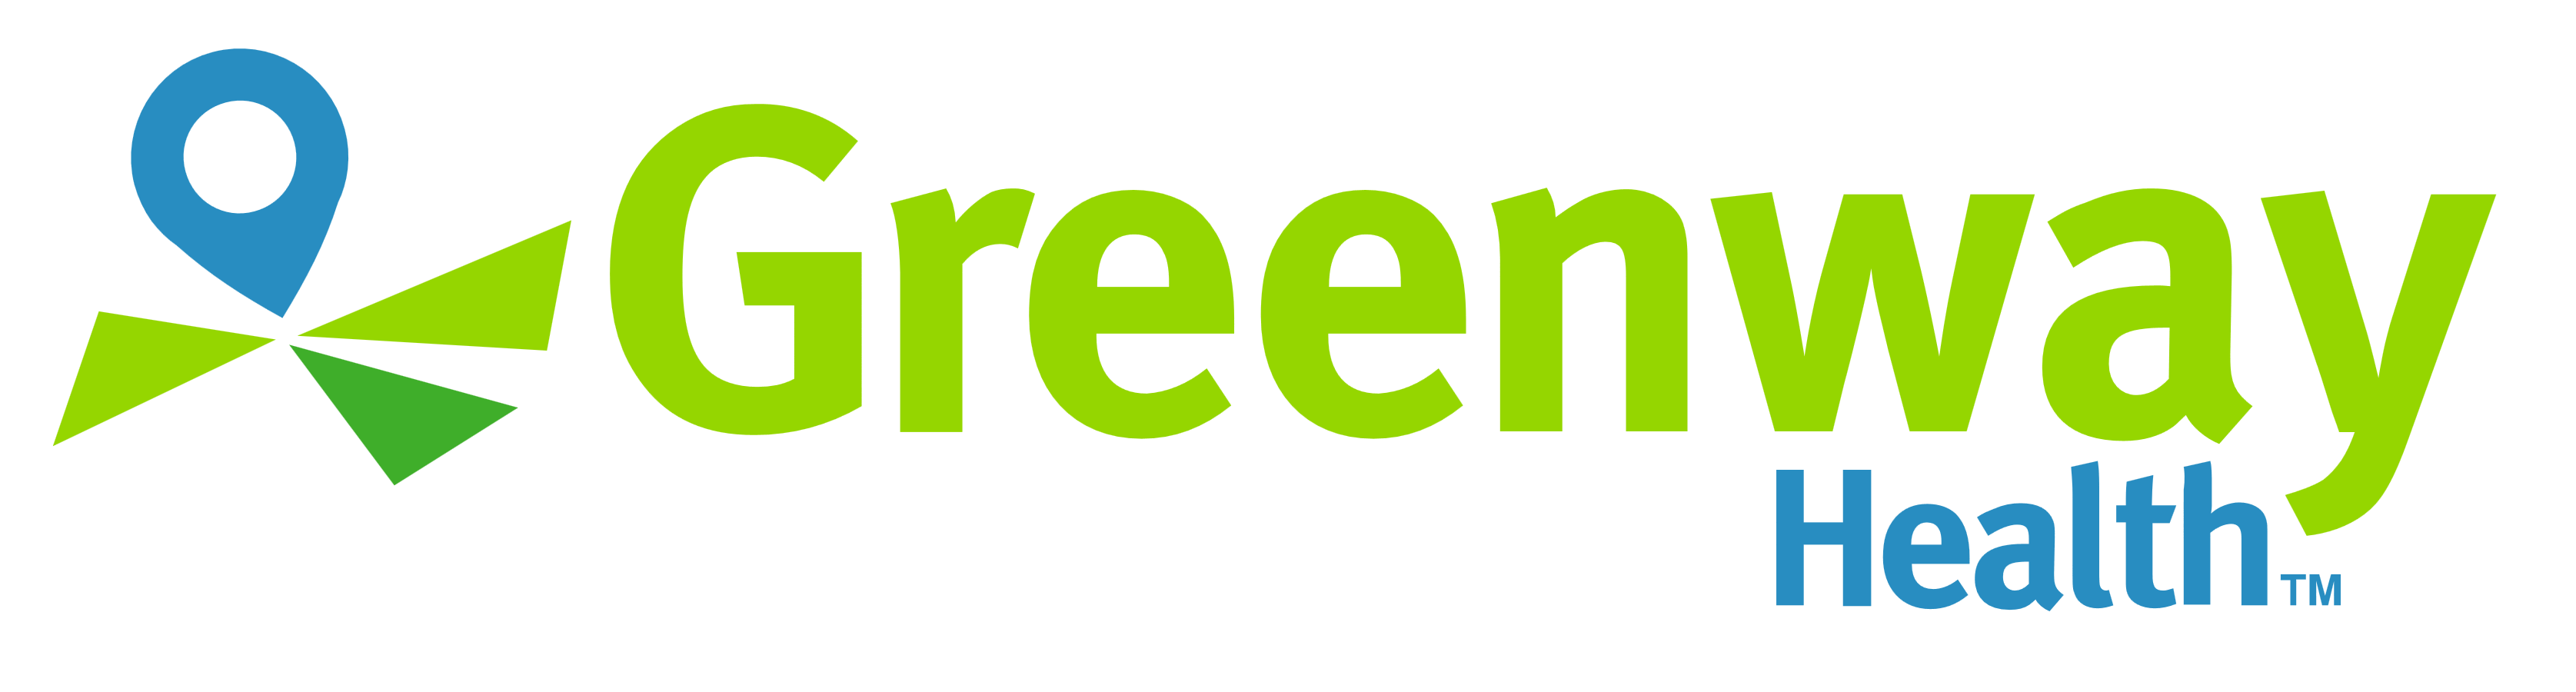 Greenway Health logo, logotype